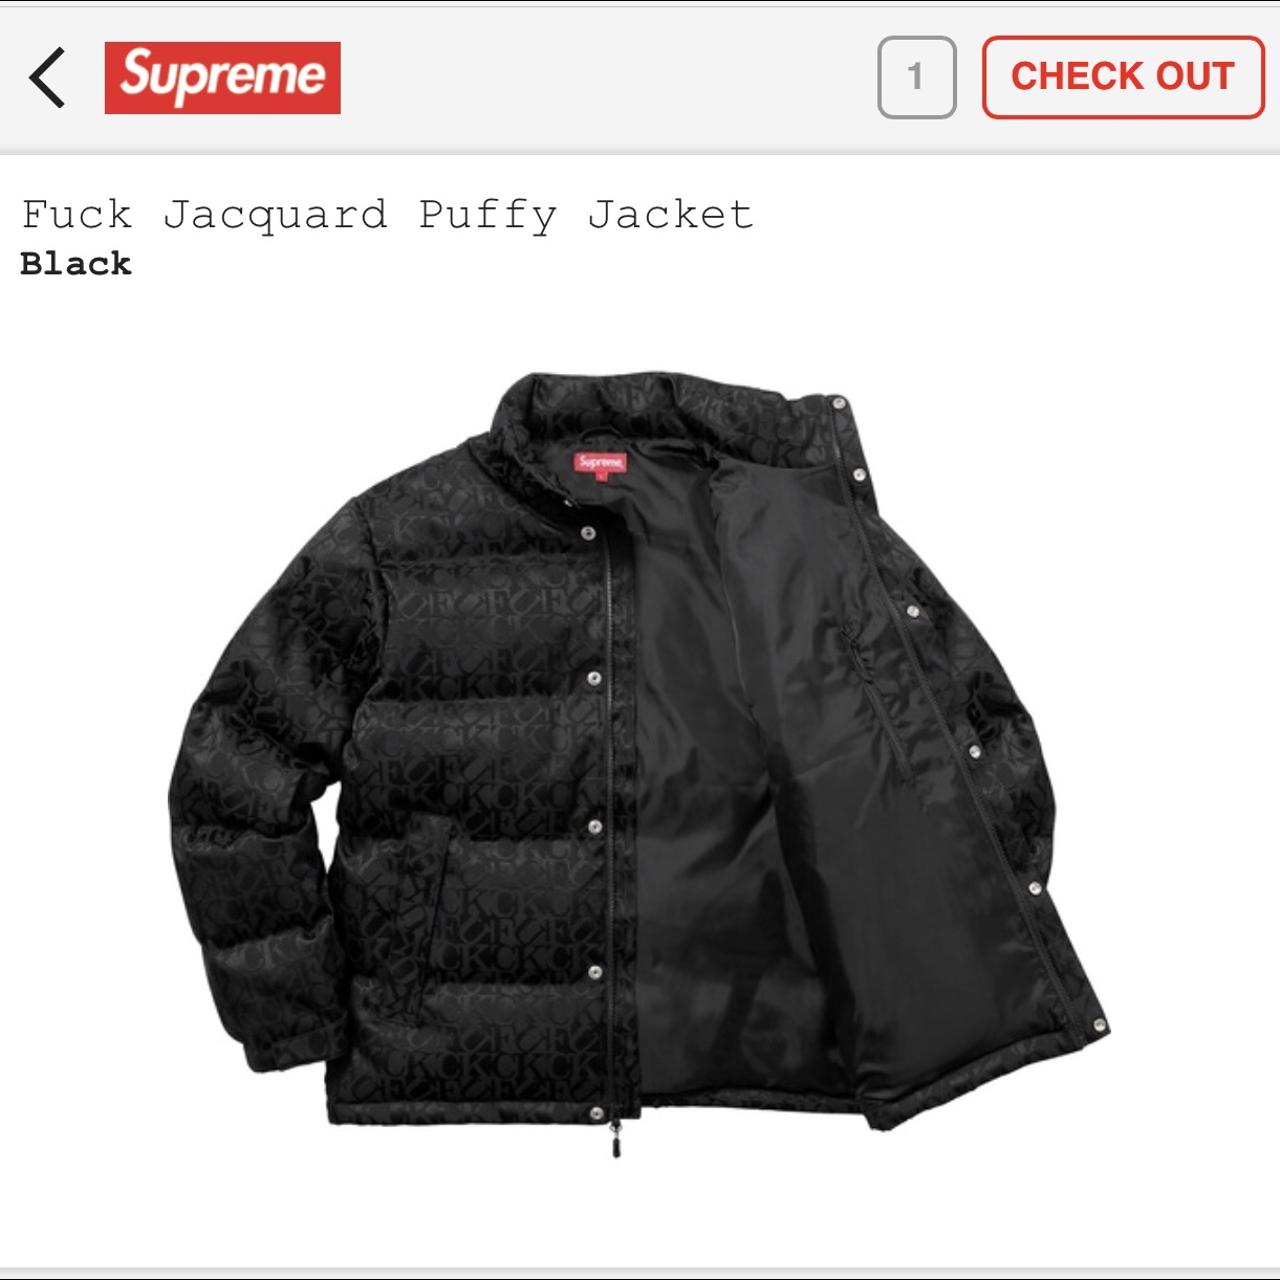 Supreme fuck jacquard puffer jacket, 10/10